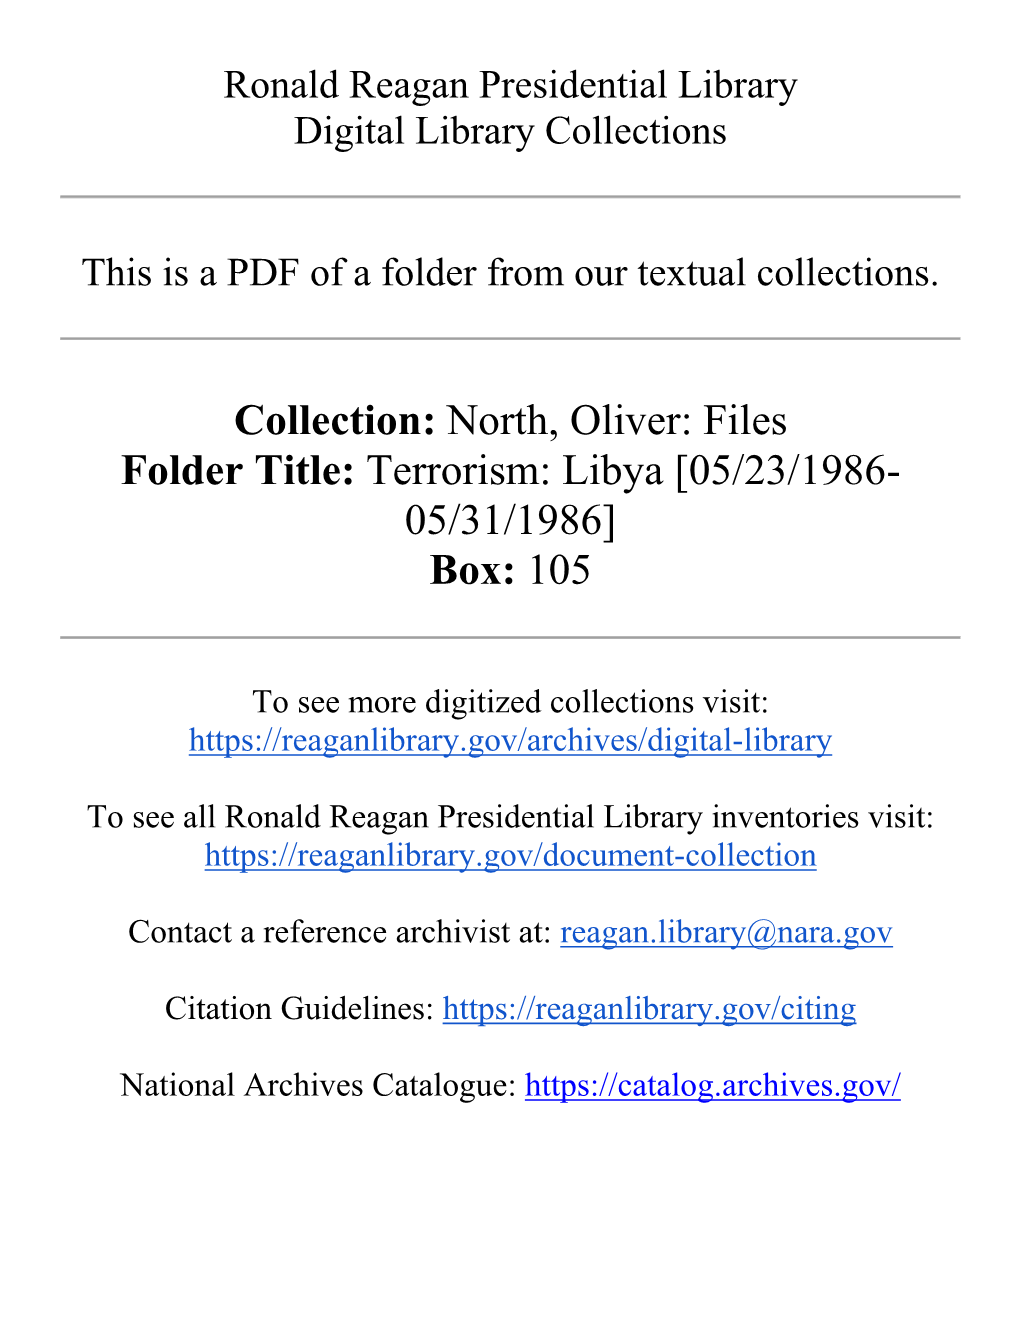 Collection: North, Oliver: Files Folder Title: Terrorism: Libya [05/23/1986- 05/31/1986] Box: 105